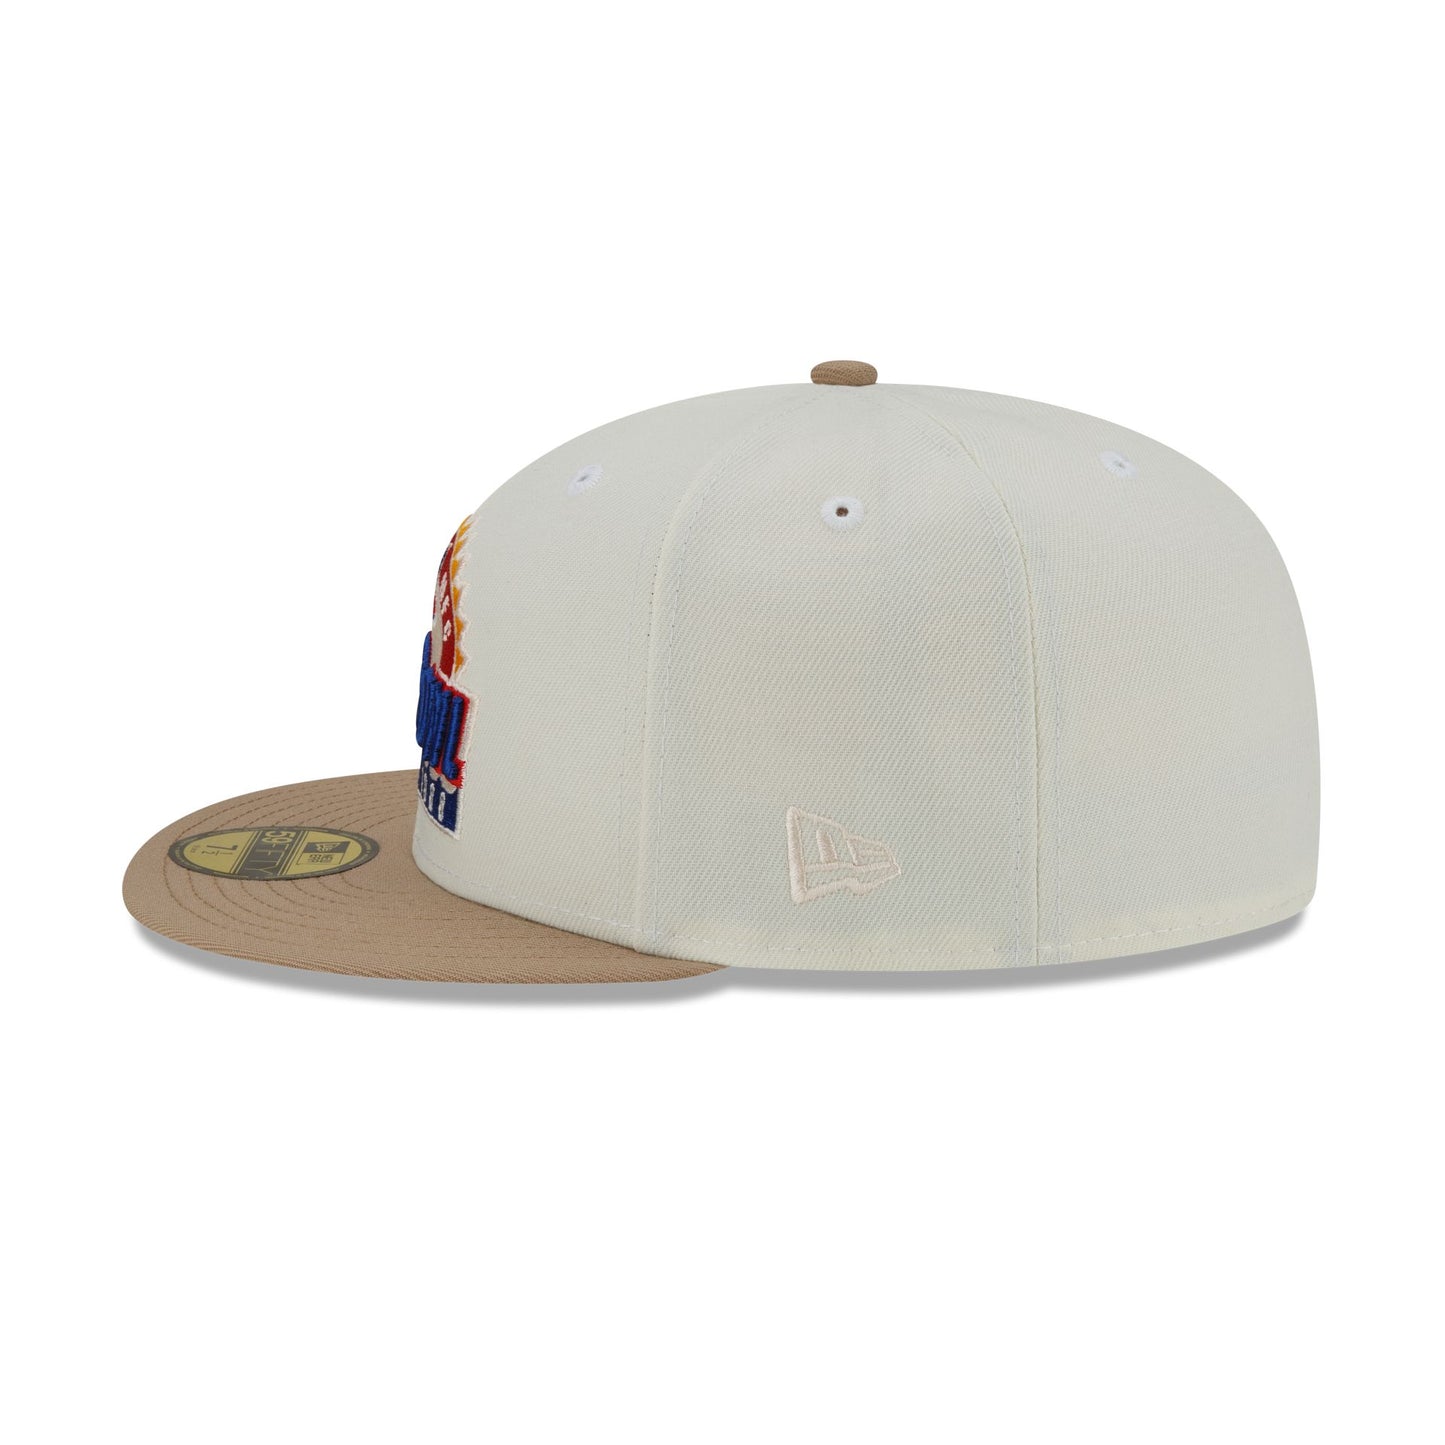 Just Caps Camel Hat 59FIFTY San Cap Francisco 49ers Fitted Era – New Visor